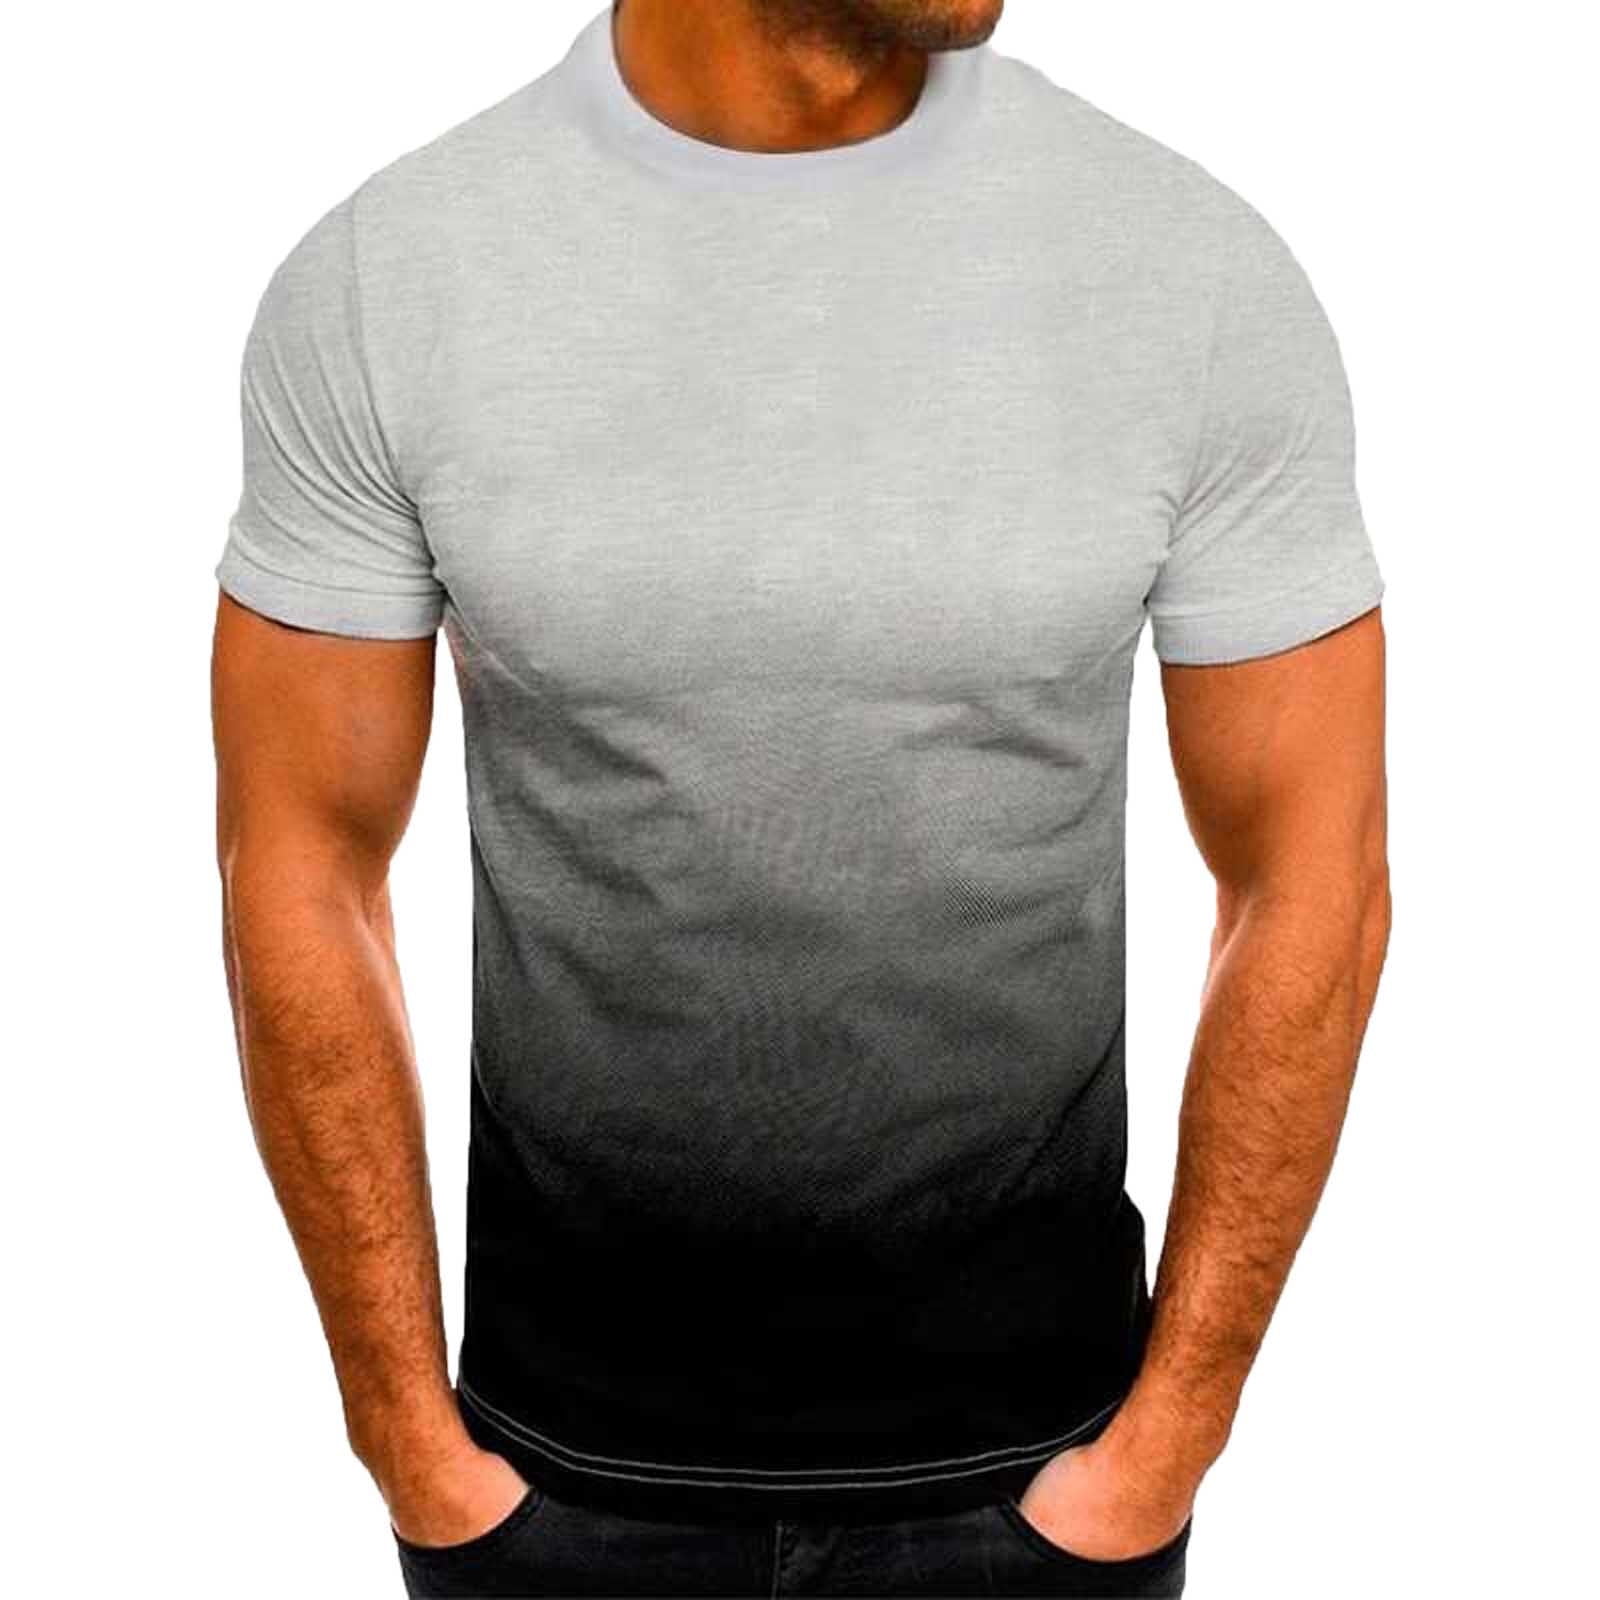 Huk Fishing Shirts For Men Men Short Sleeve Printing Round Neck Pullover T  Shirt Blouse Men'S Undershirts,Blue,XL